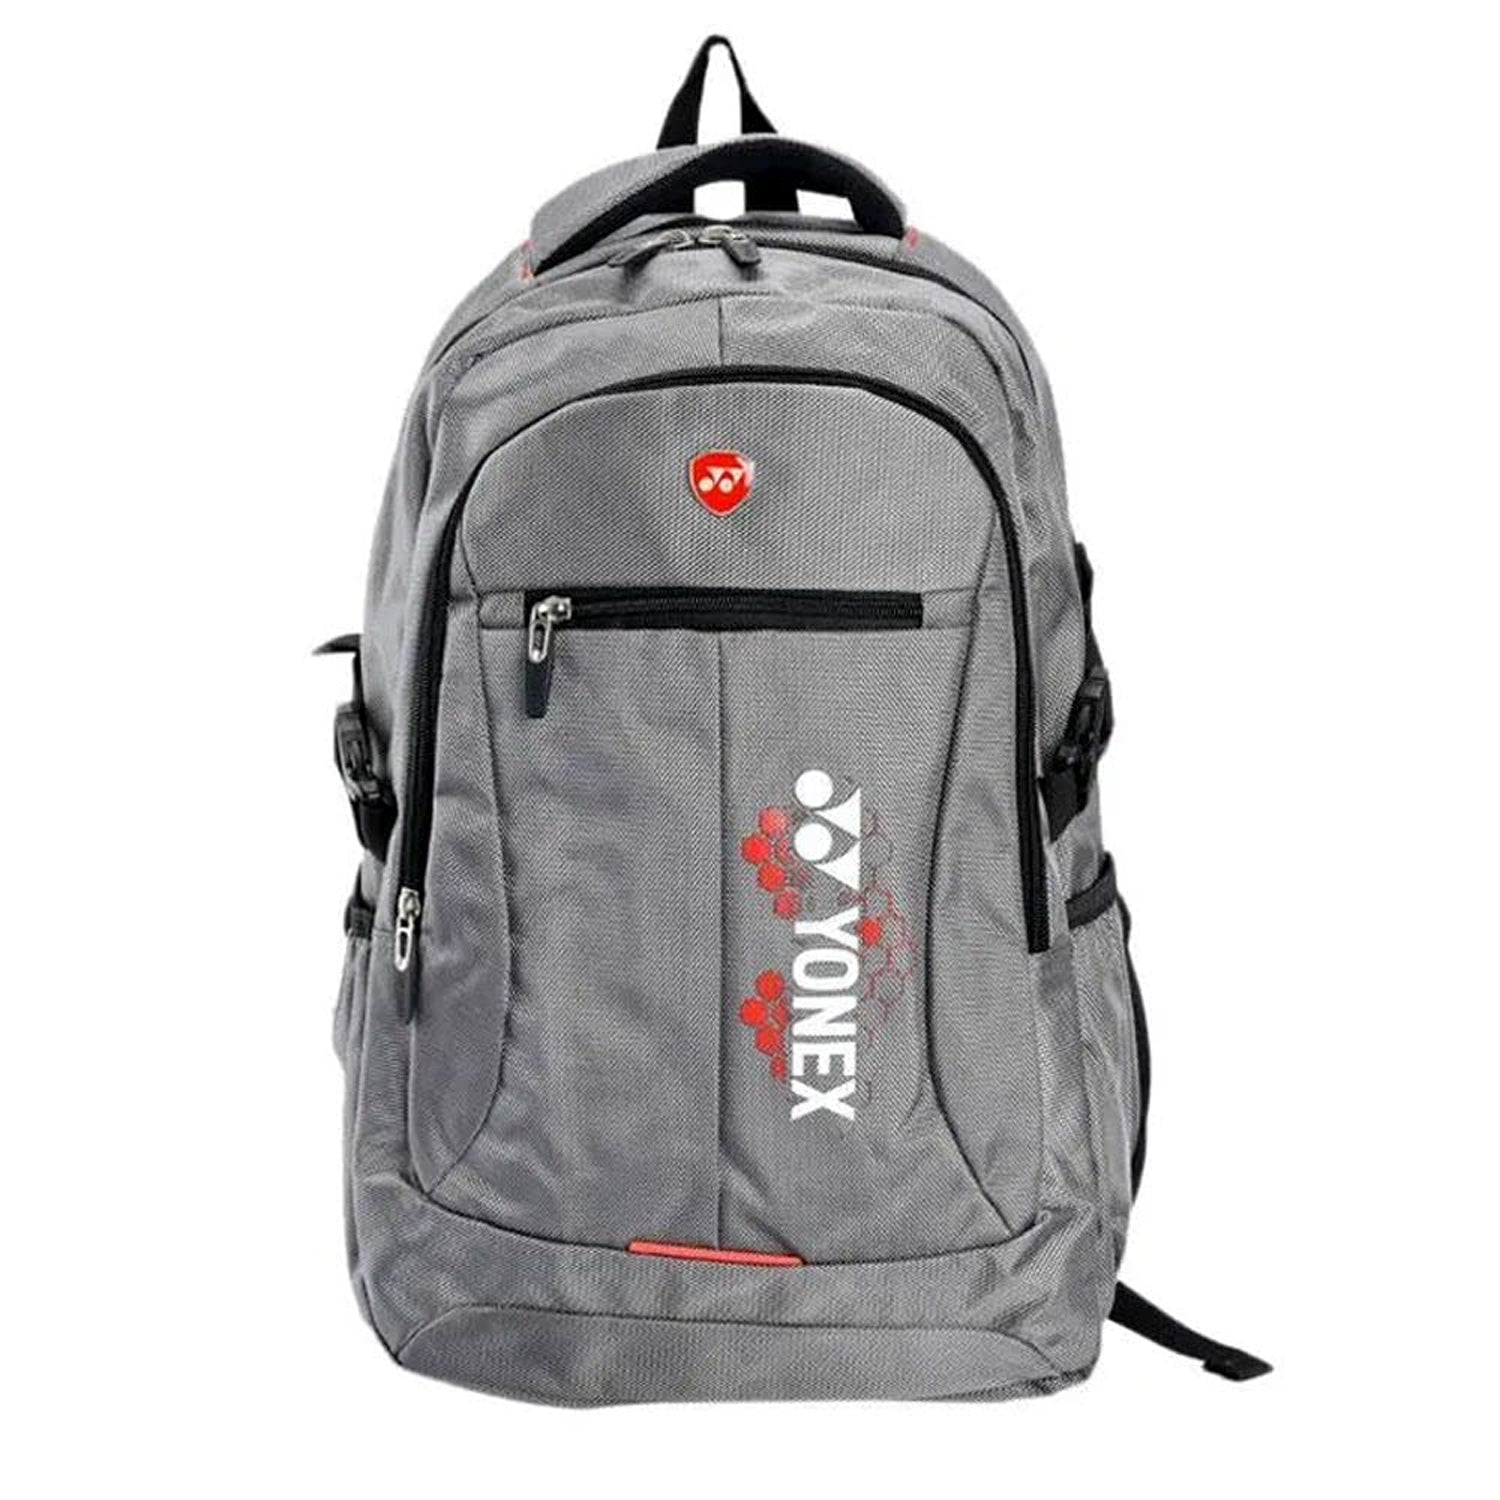 Yonex SUNR H01AO-S Backpack, Gray - Best Price online Prokicksports.com